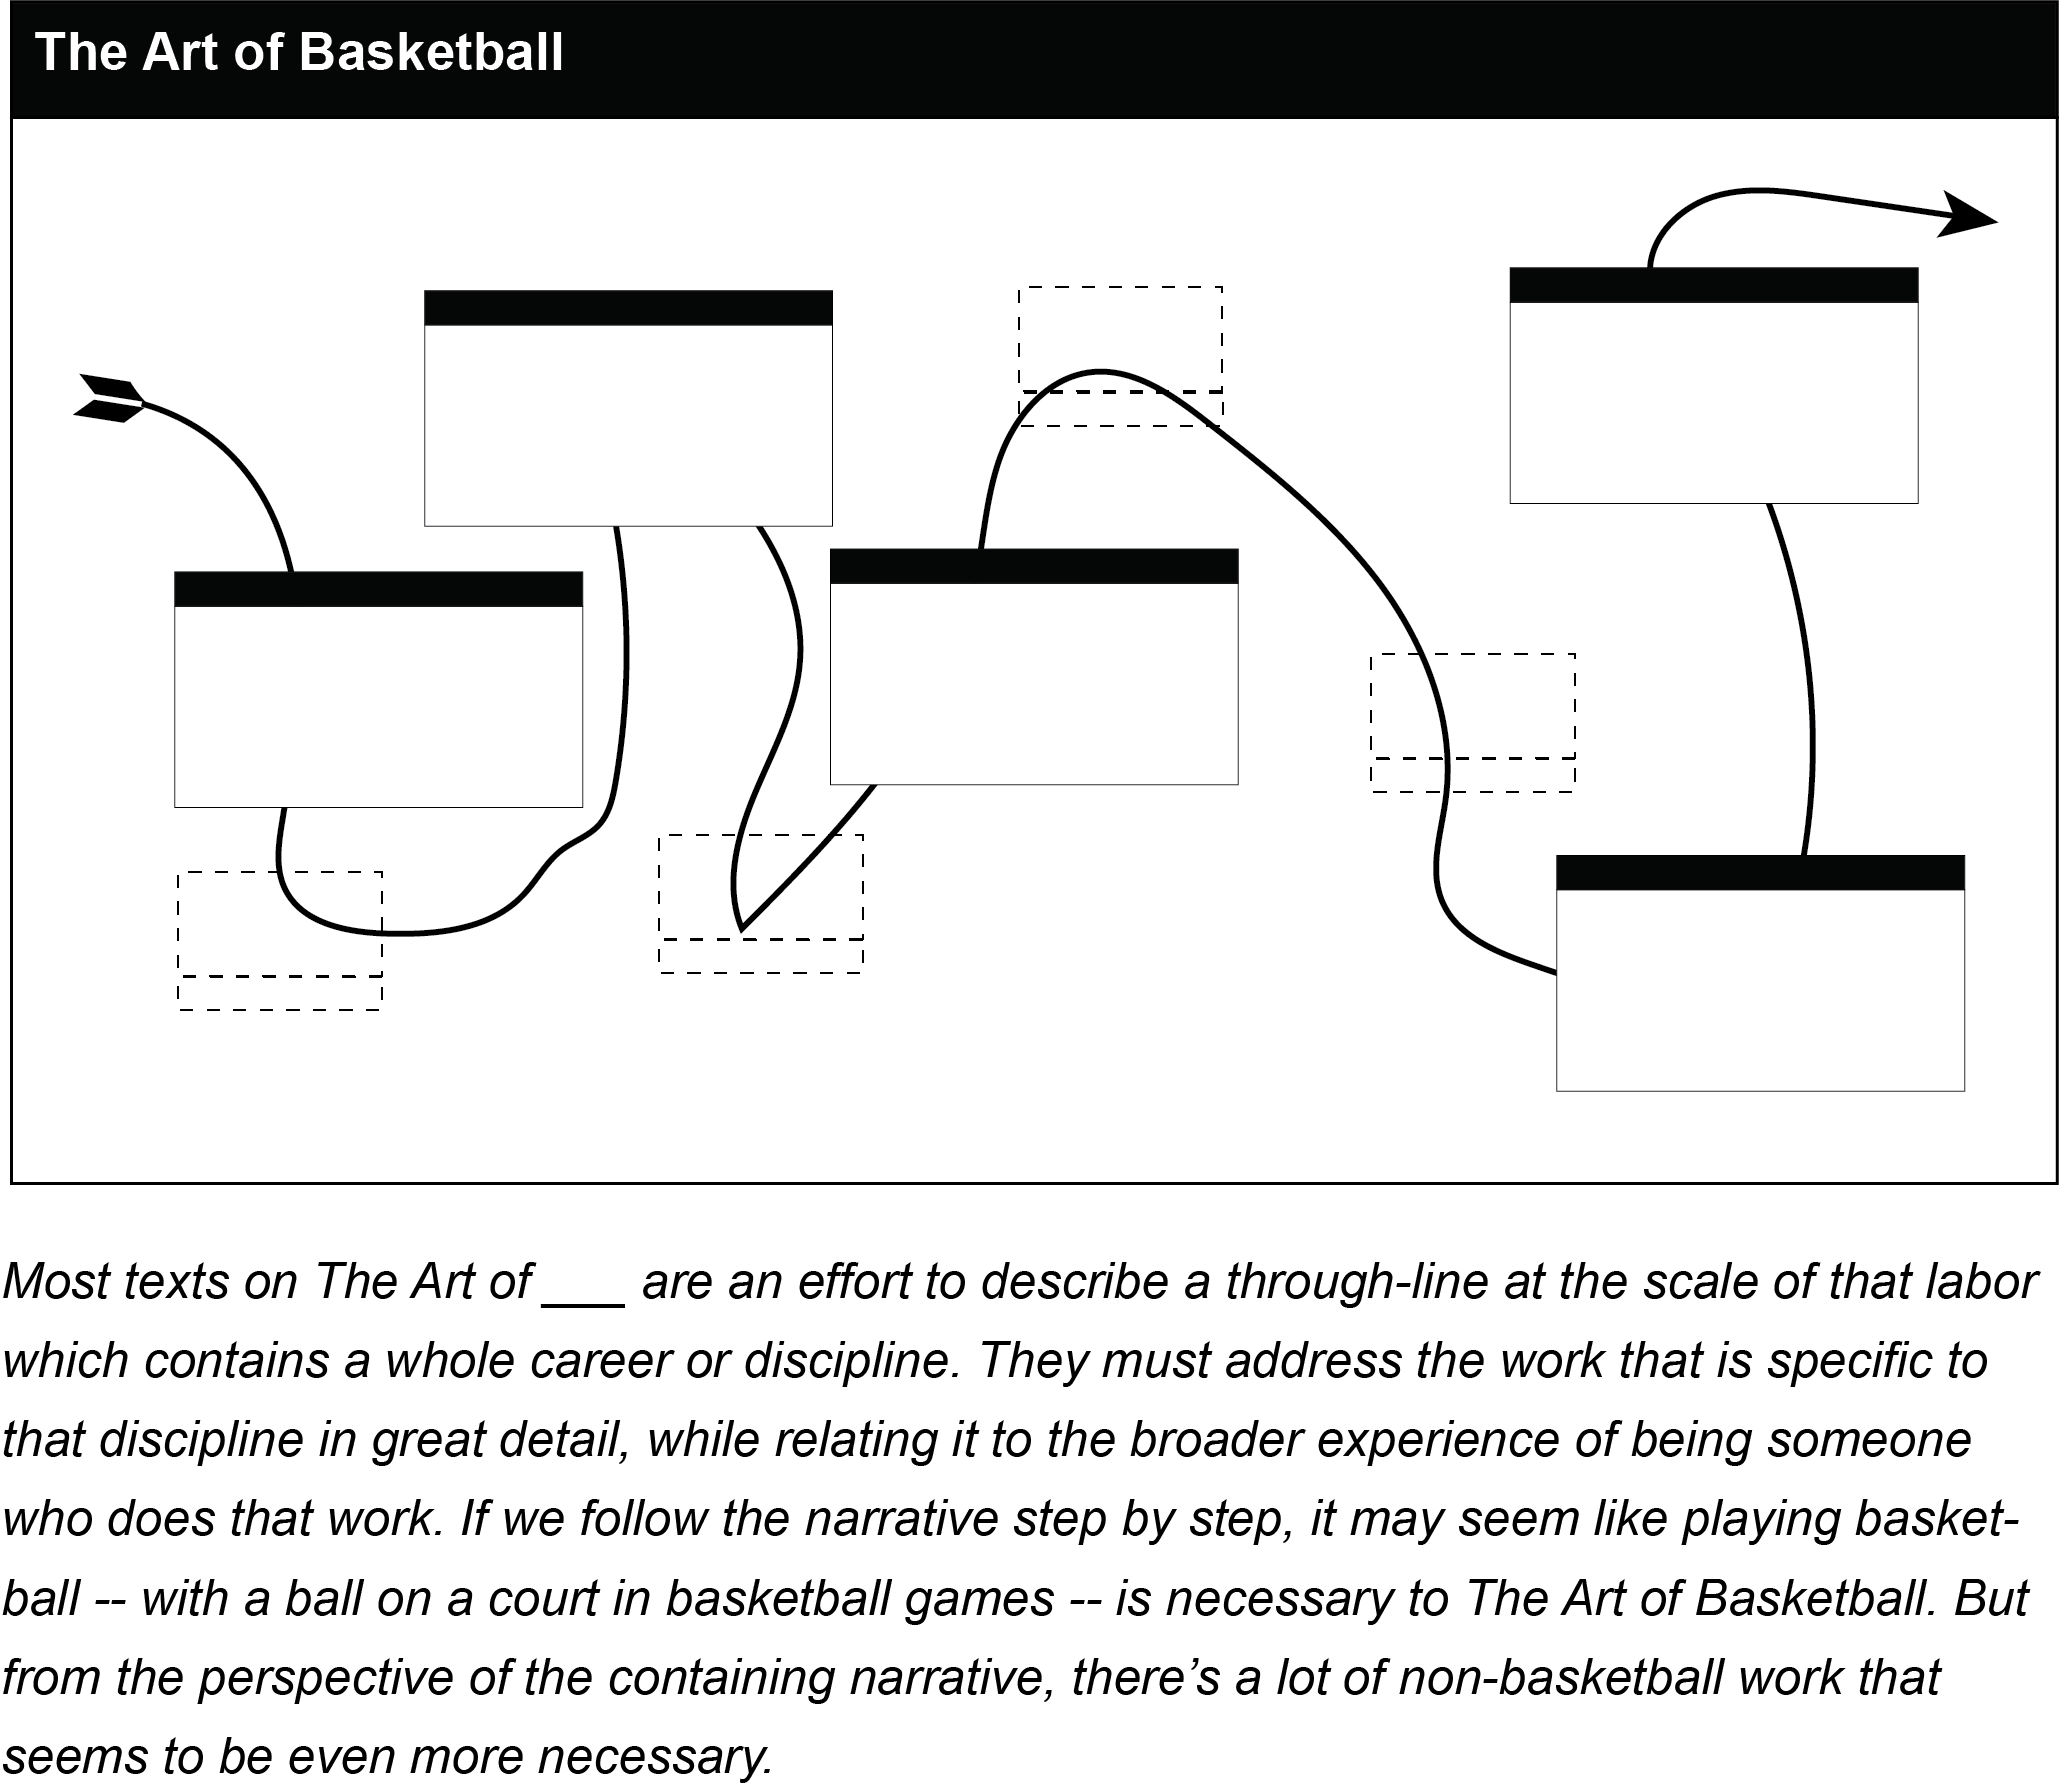 The Art of Basketball